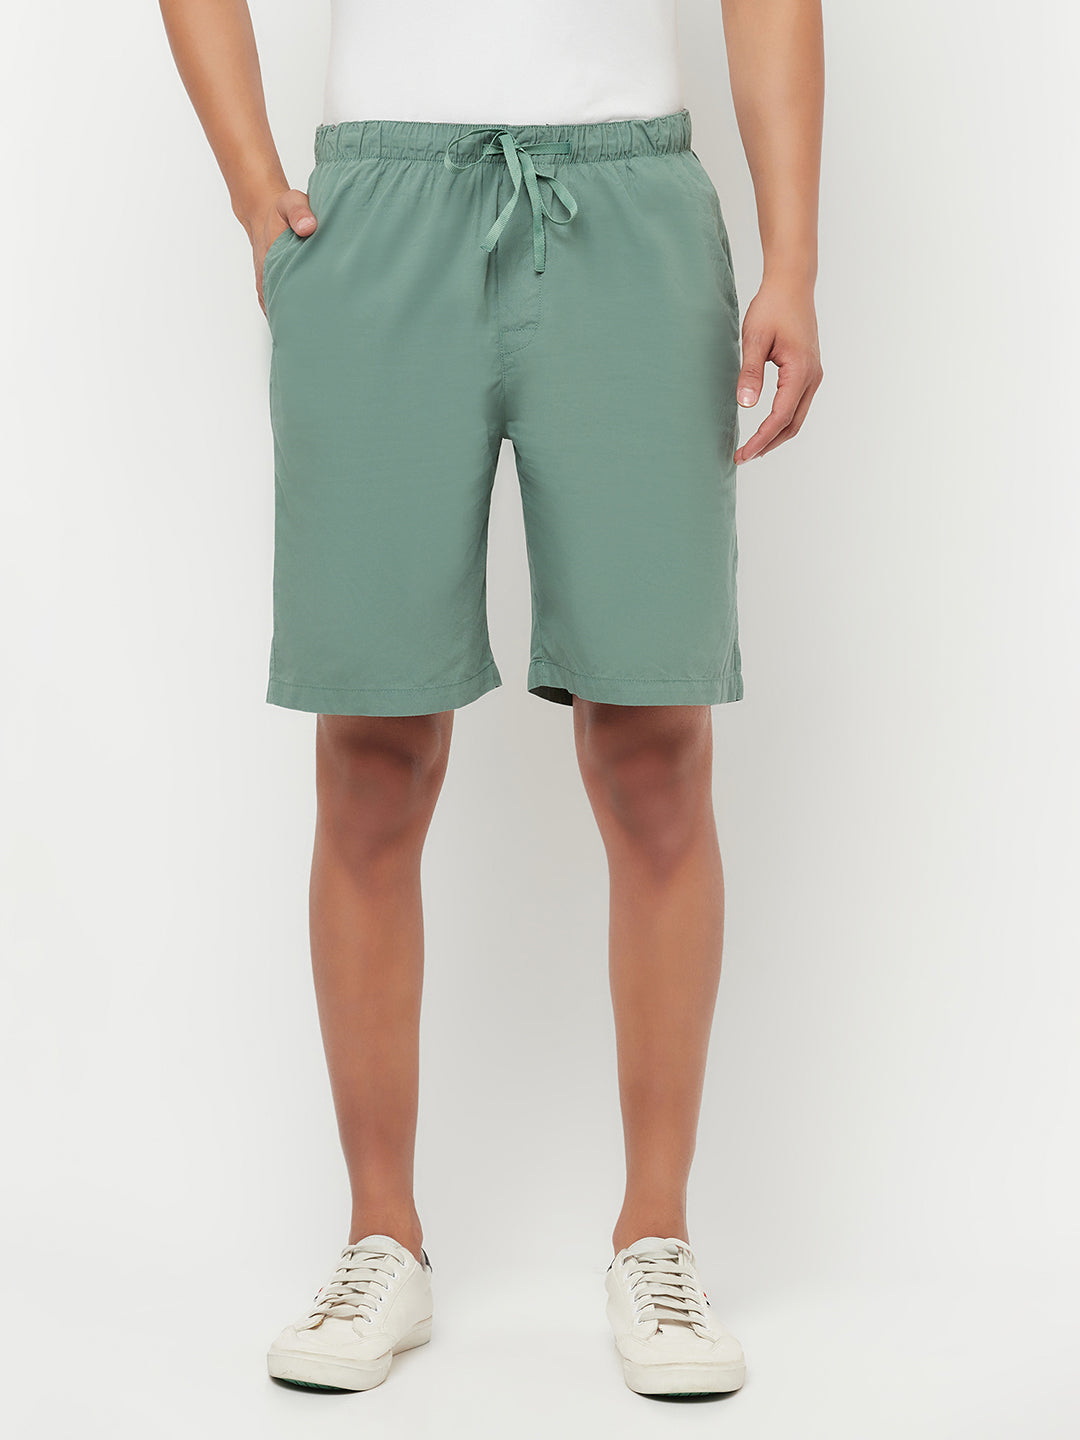 Green Lounge Shorts - Men Lounge Shorts